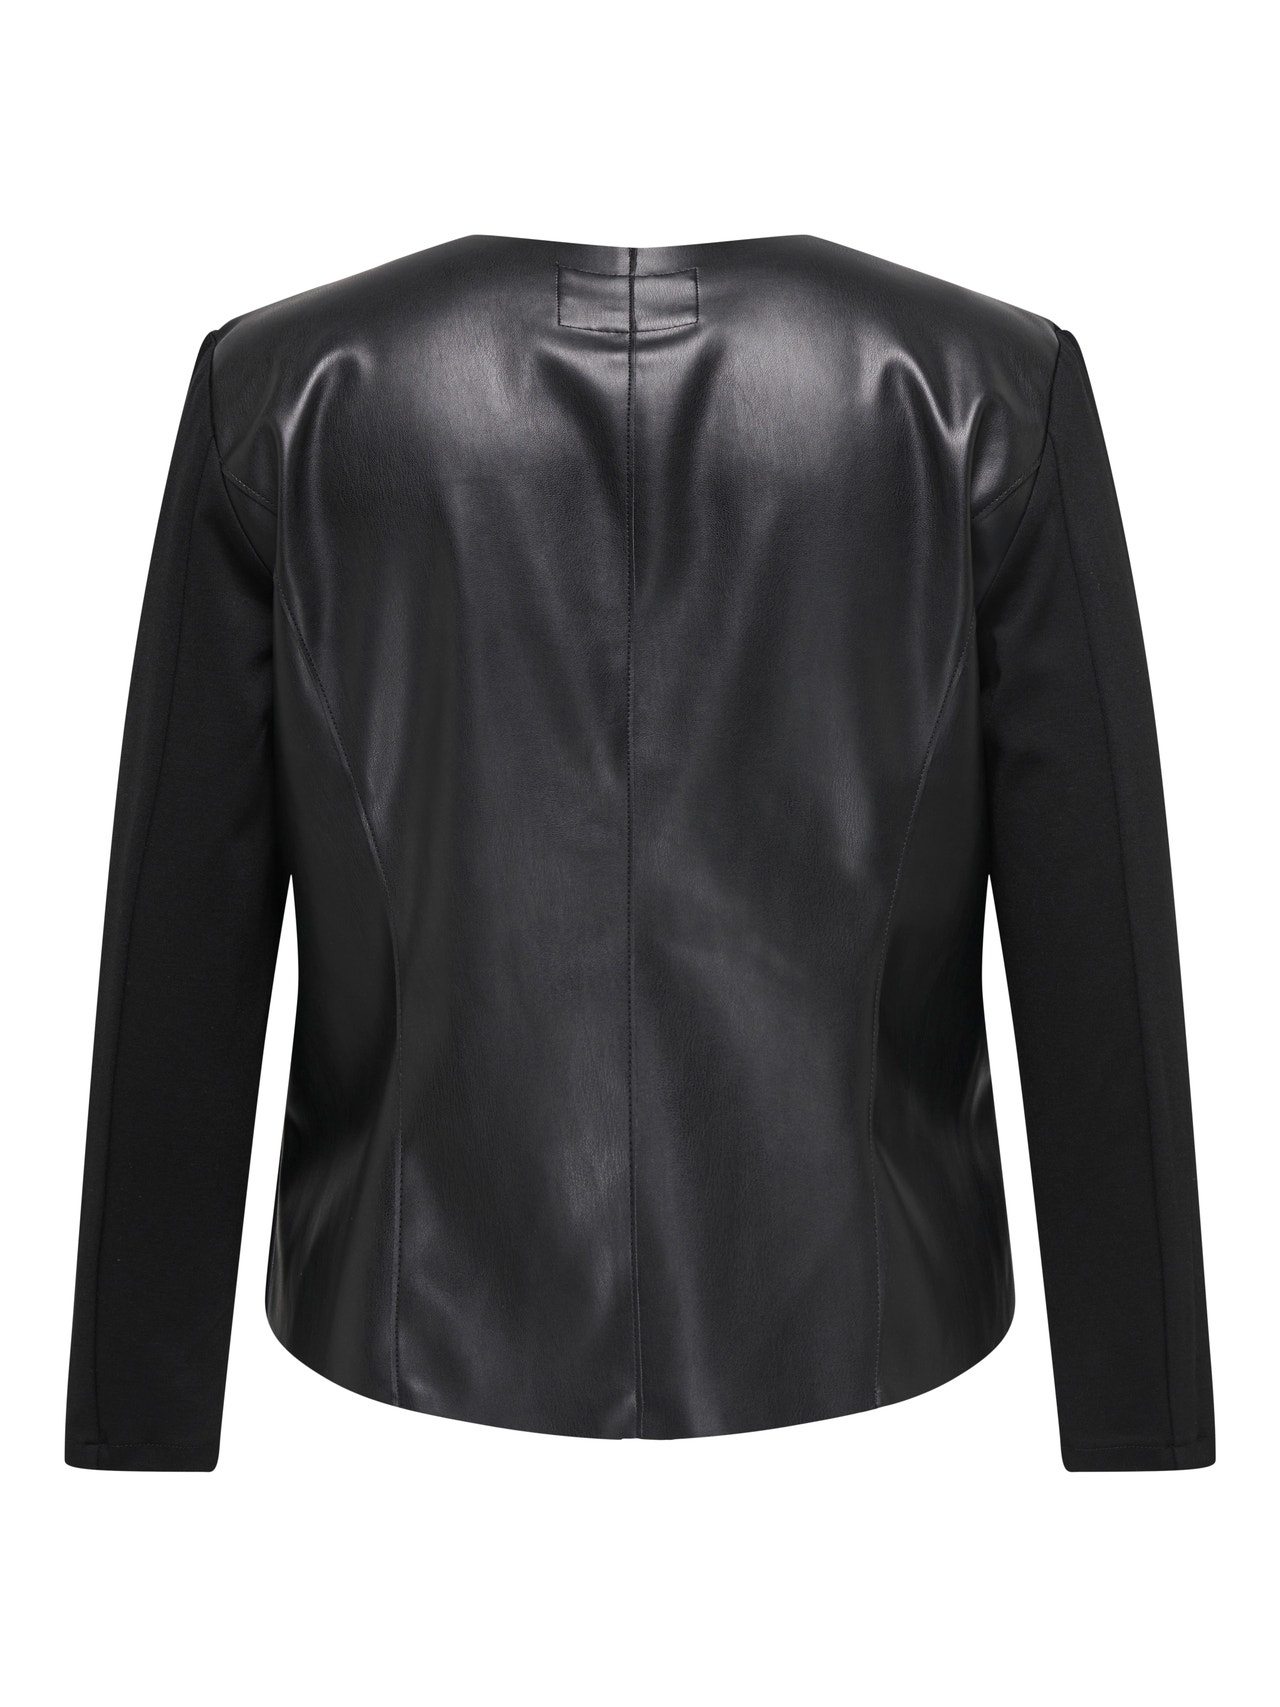 ONLY Curvy faux leather blazer -Black - 15301100